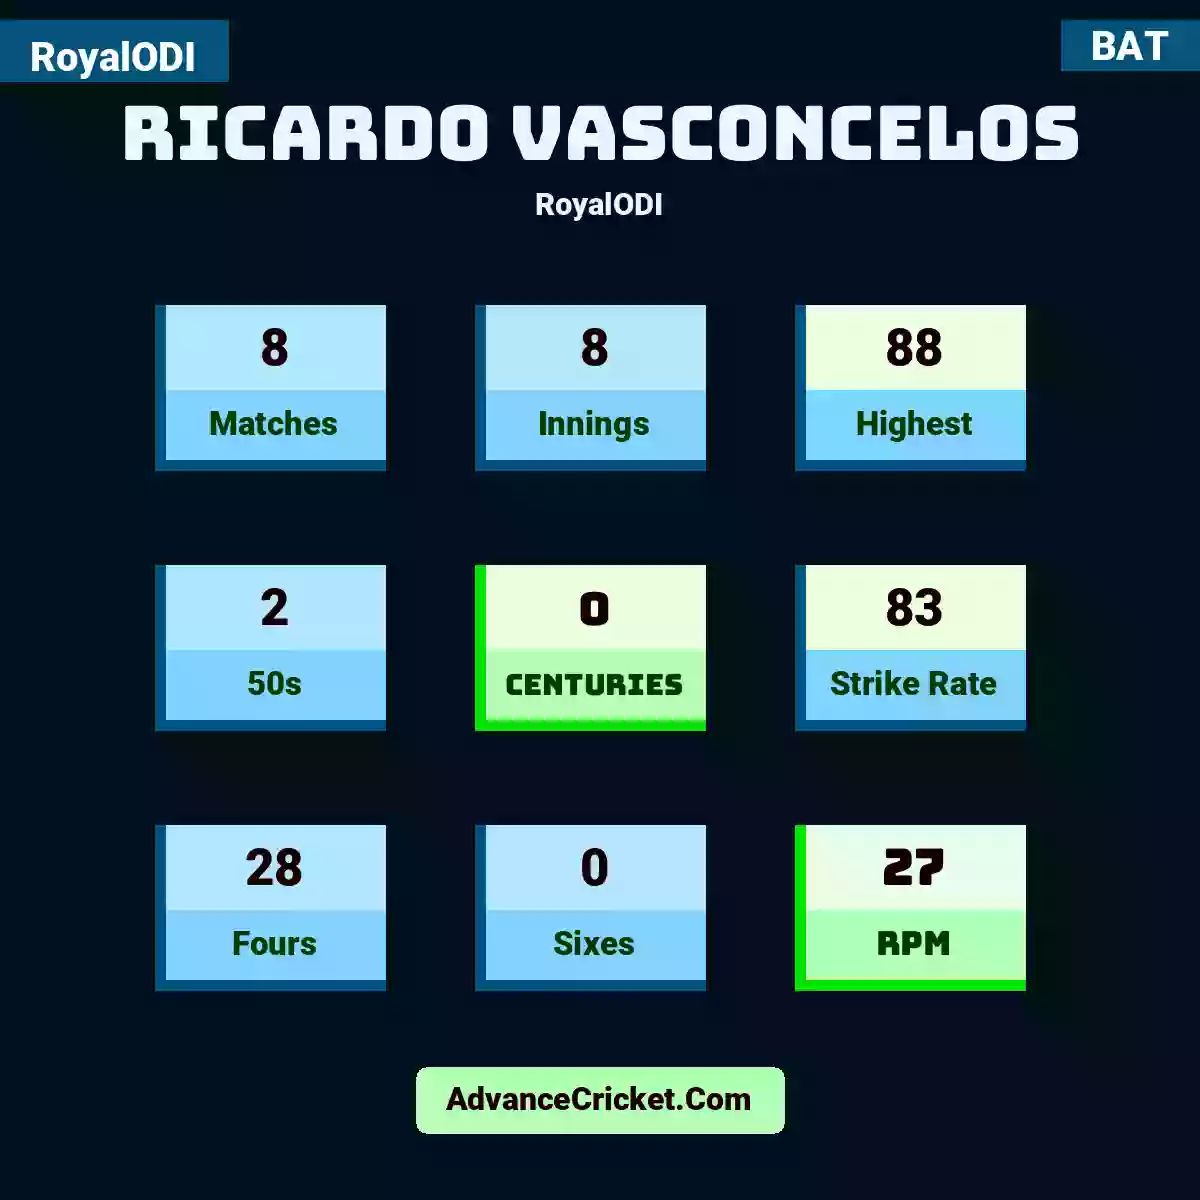 Ricardo Vasconcelos RoyalODI , Ricardo Vasconcelos played 8 matches, scored 88 runs as highest, 2 half-centuries, and 0 centuries, with a strike rate of 83. R.Vasconcelos hit 28 fours and 0 sixes, with an RPM of 27.